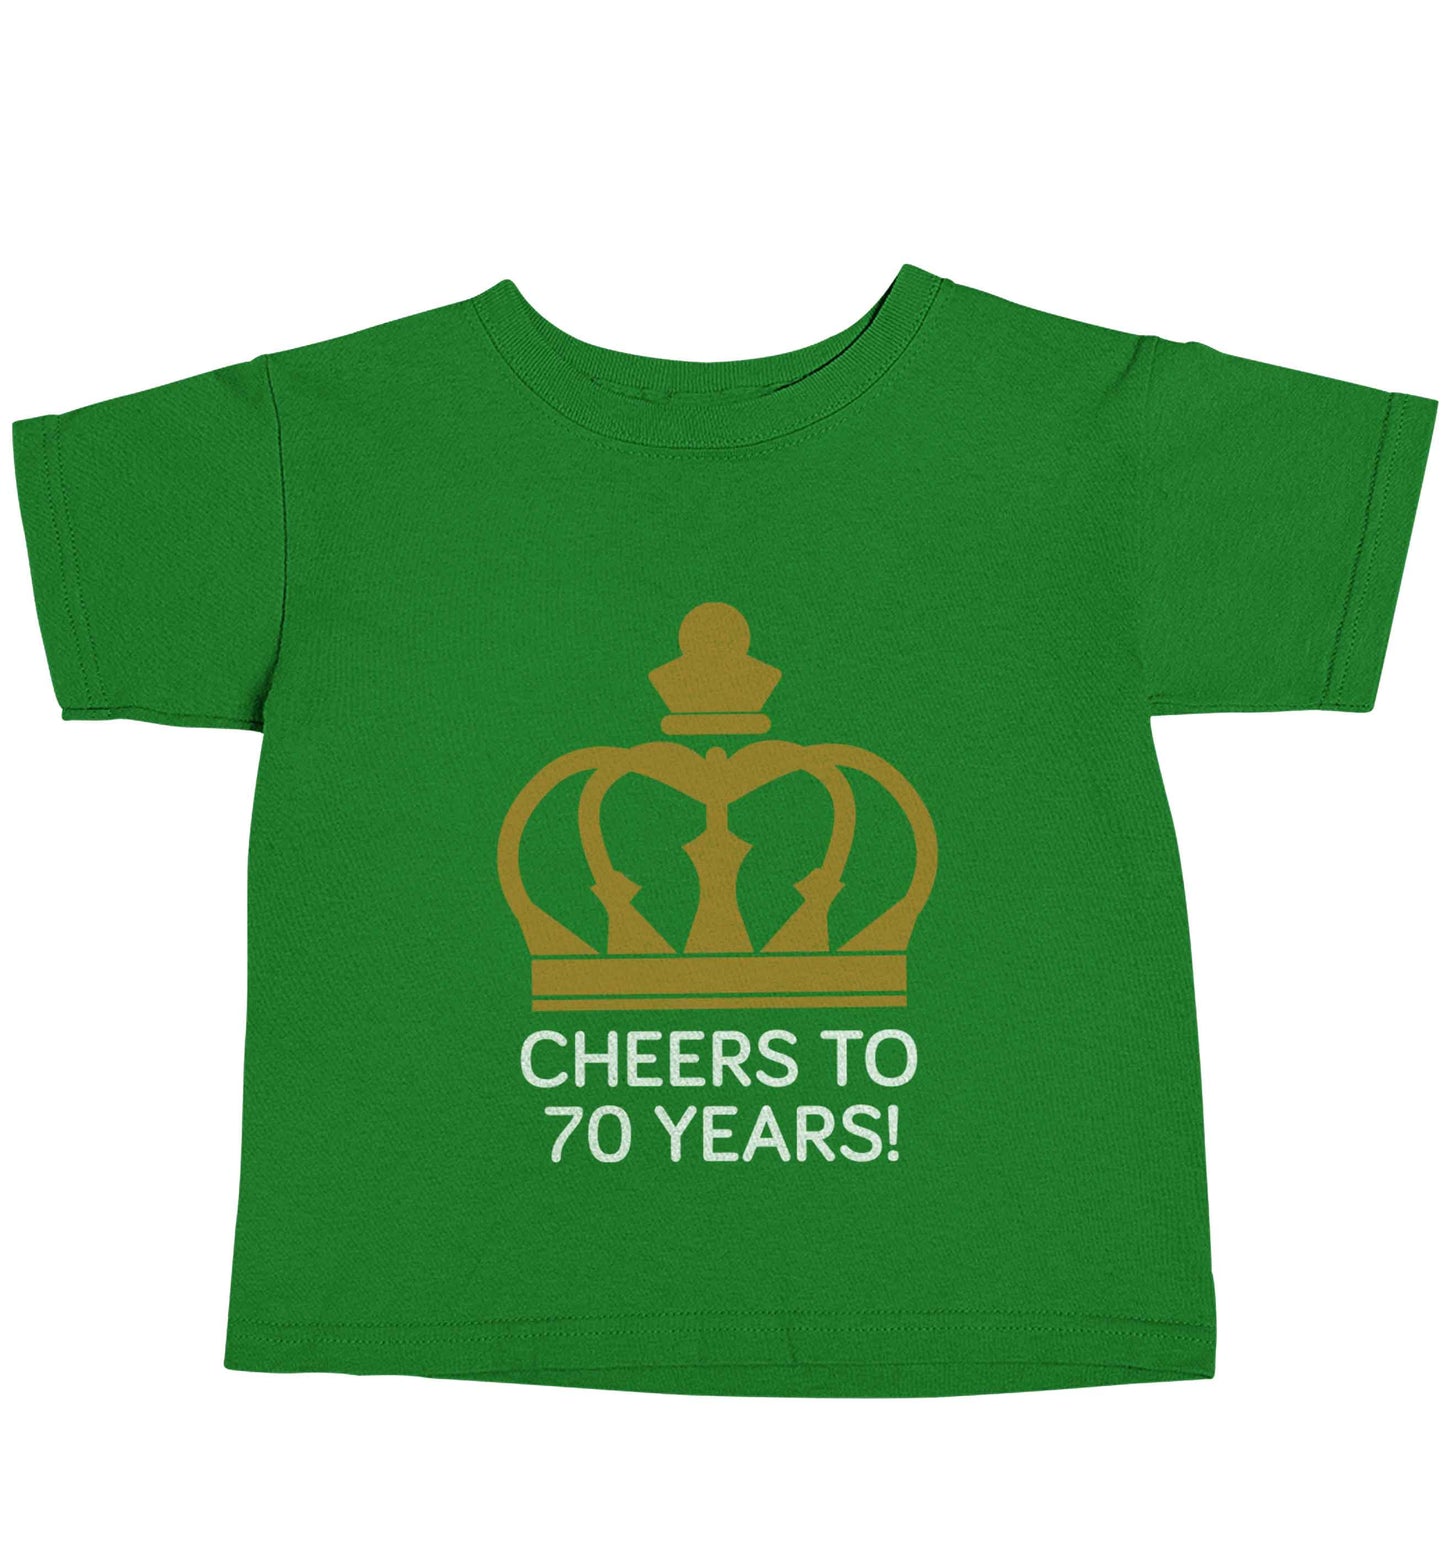 Cheers to 70 years! green baby toddler Tshirt 2 Years